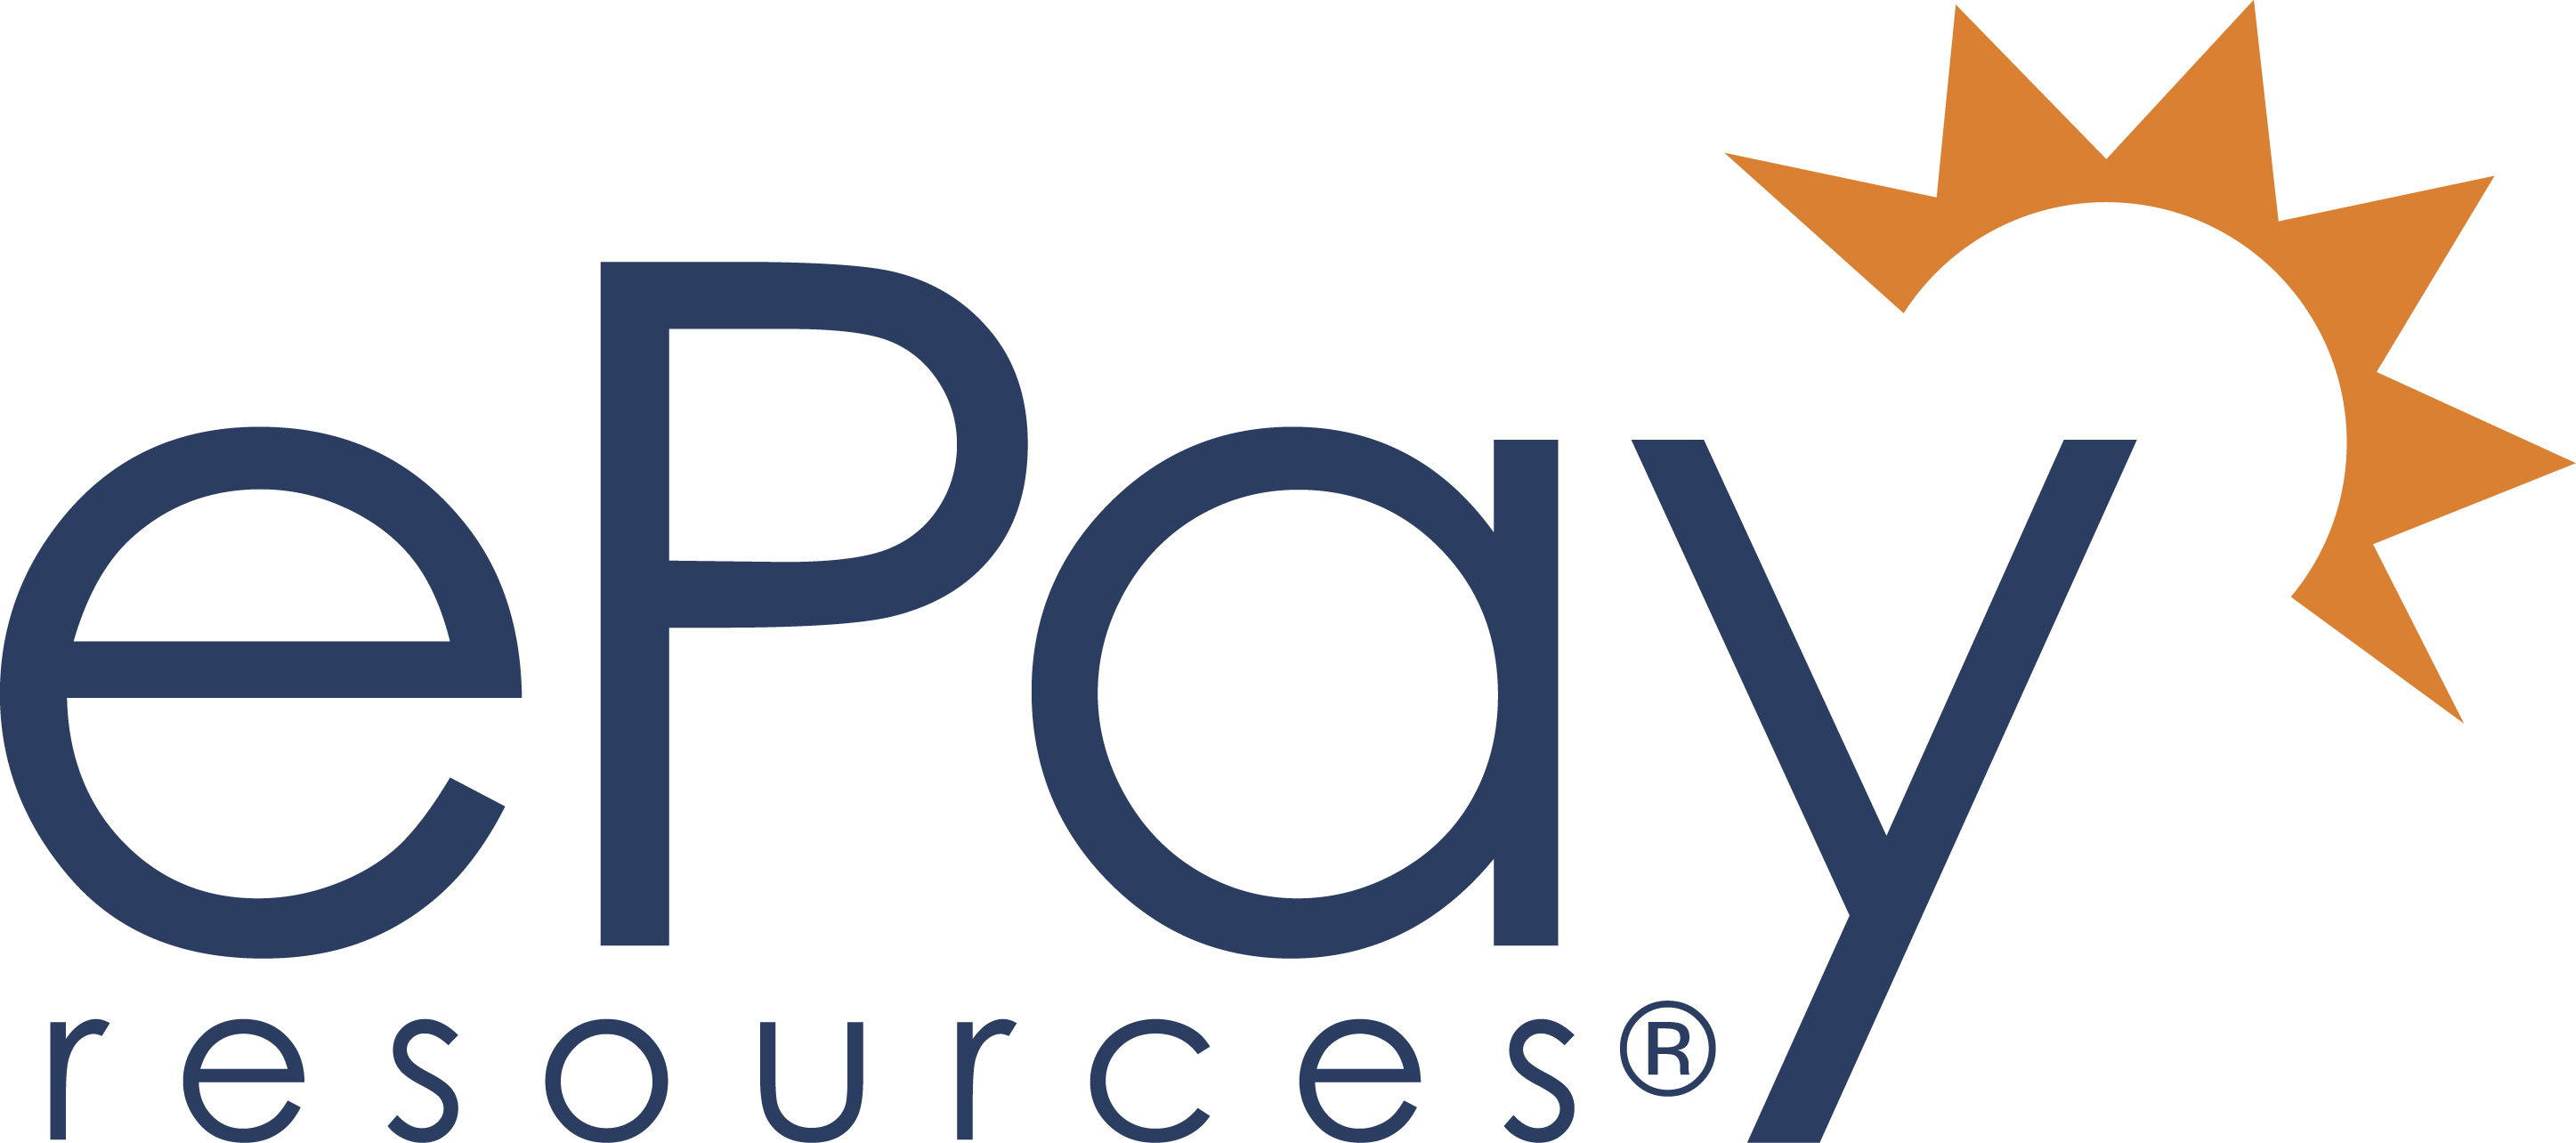 epay Logo